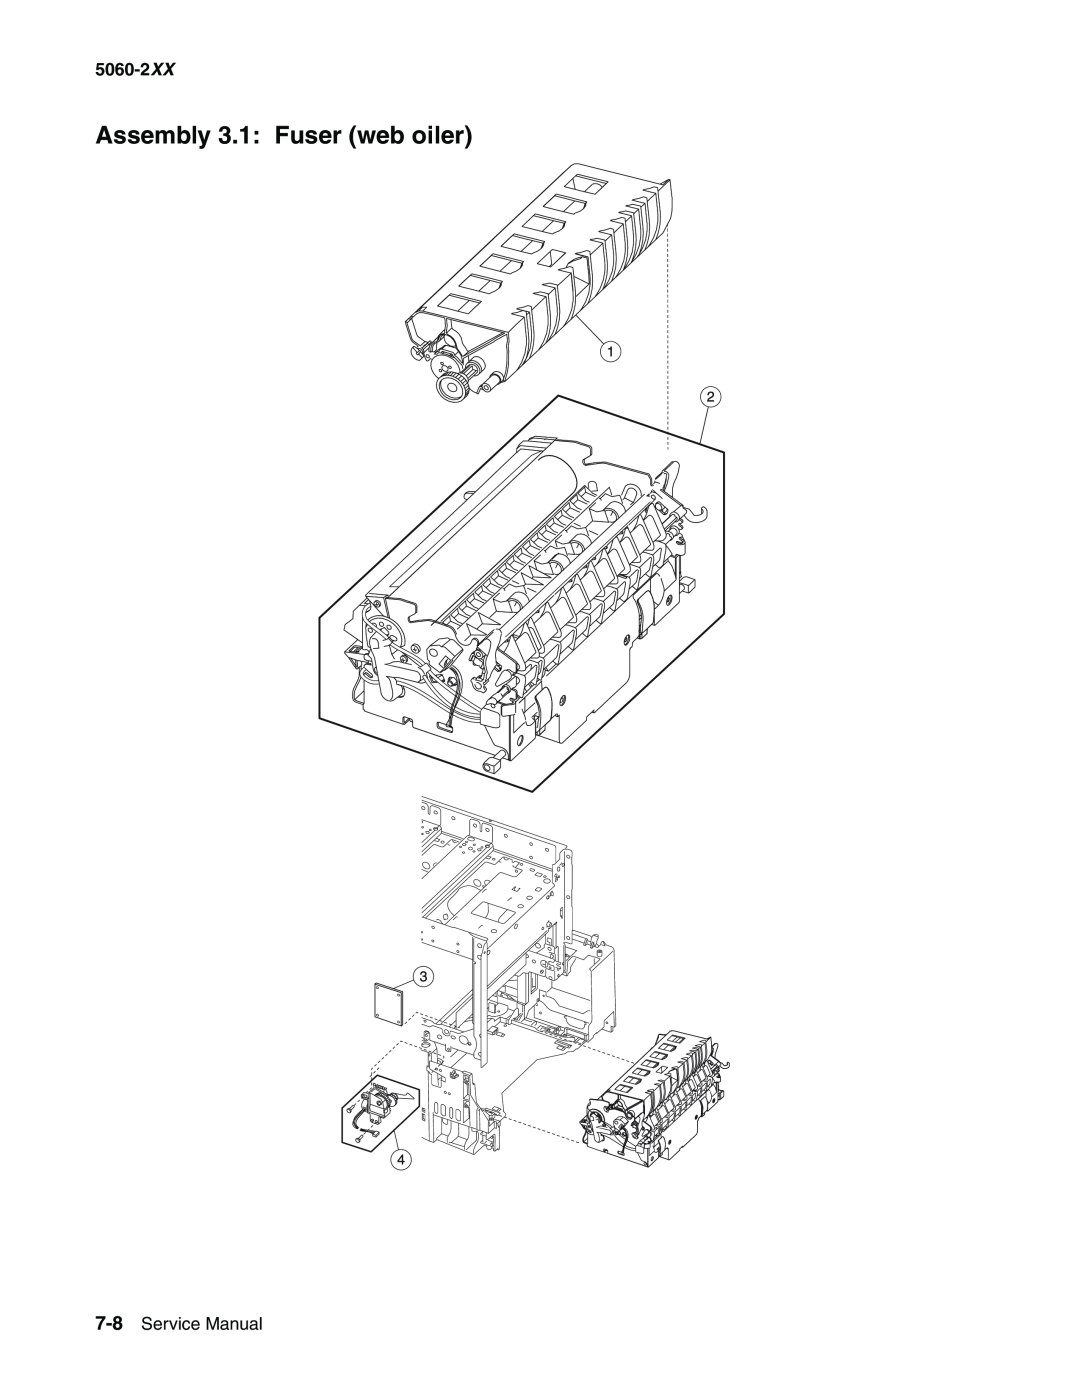 Lexmark 5060-2XX manual Assembly 3.1 Fuser web oiler, Service Manual 